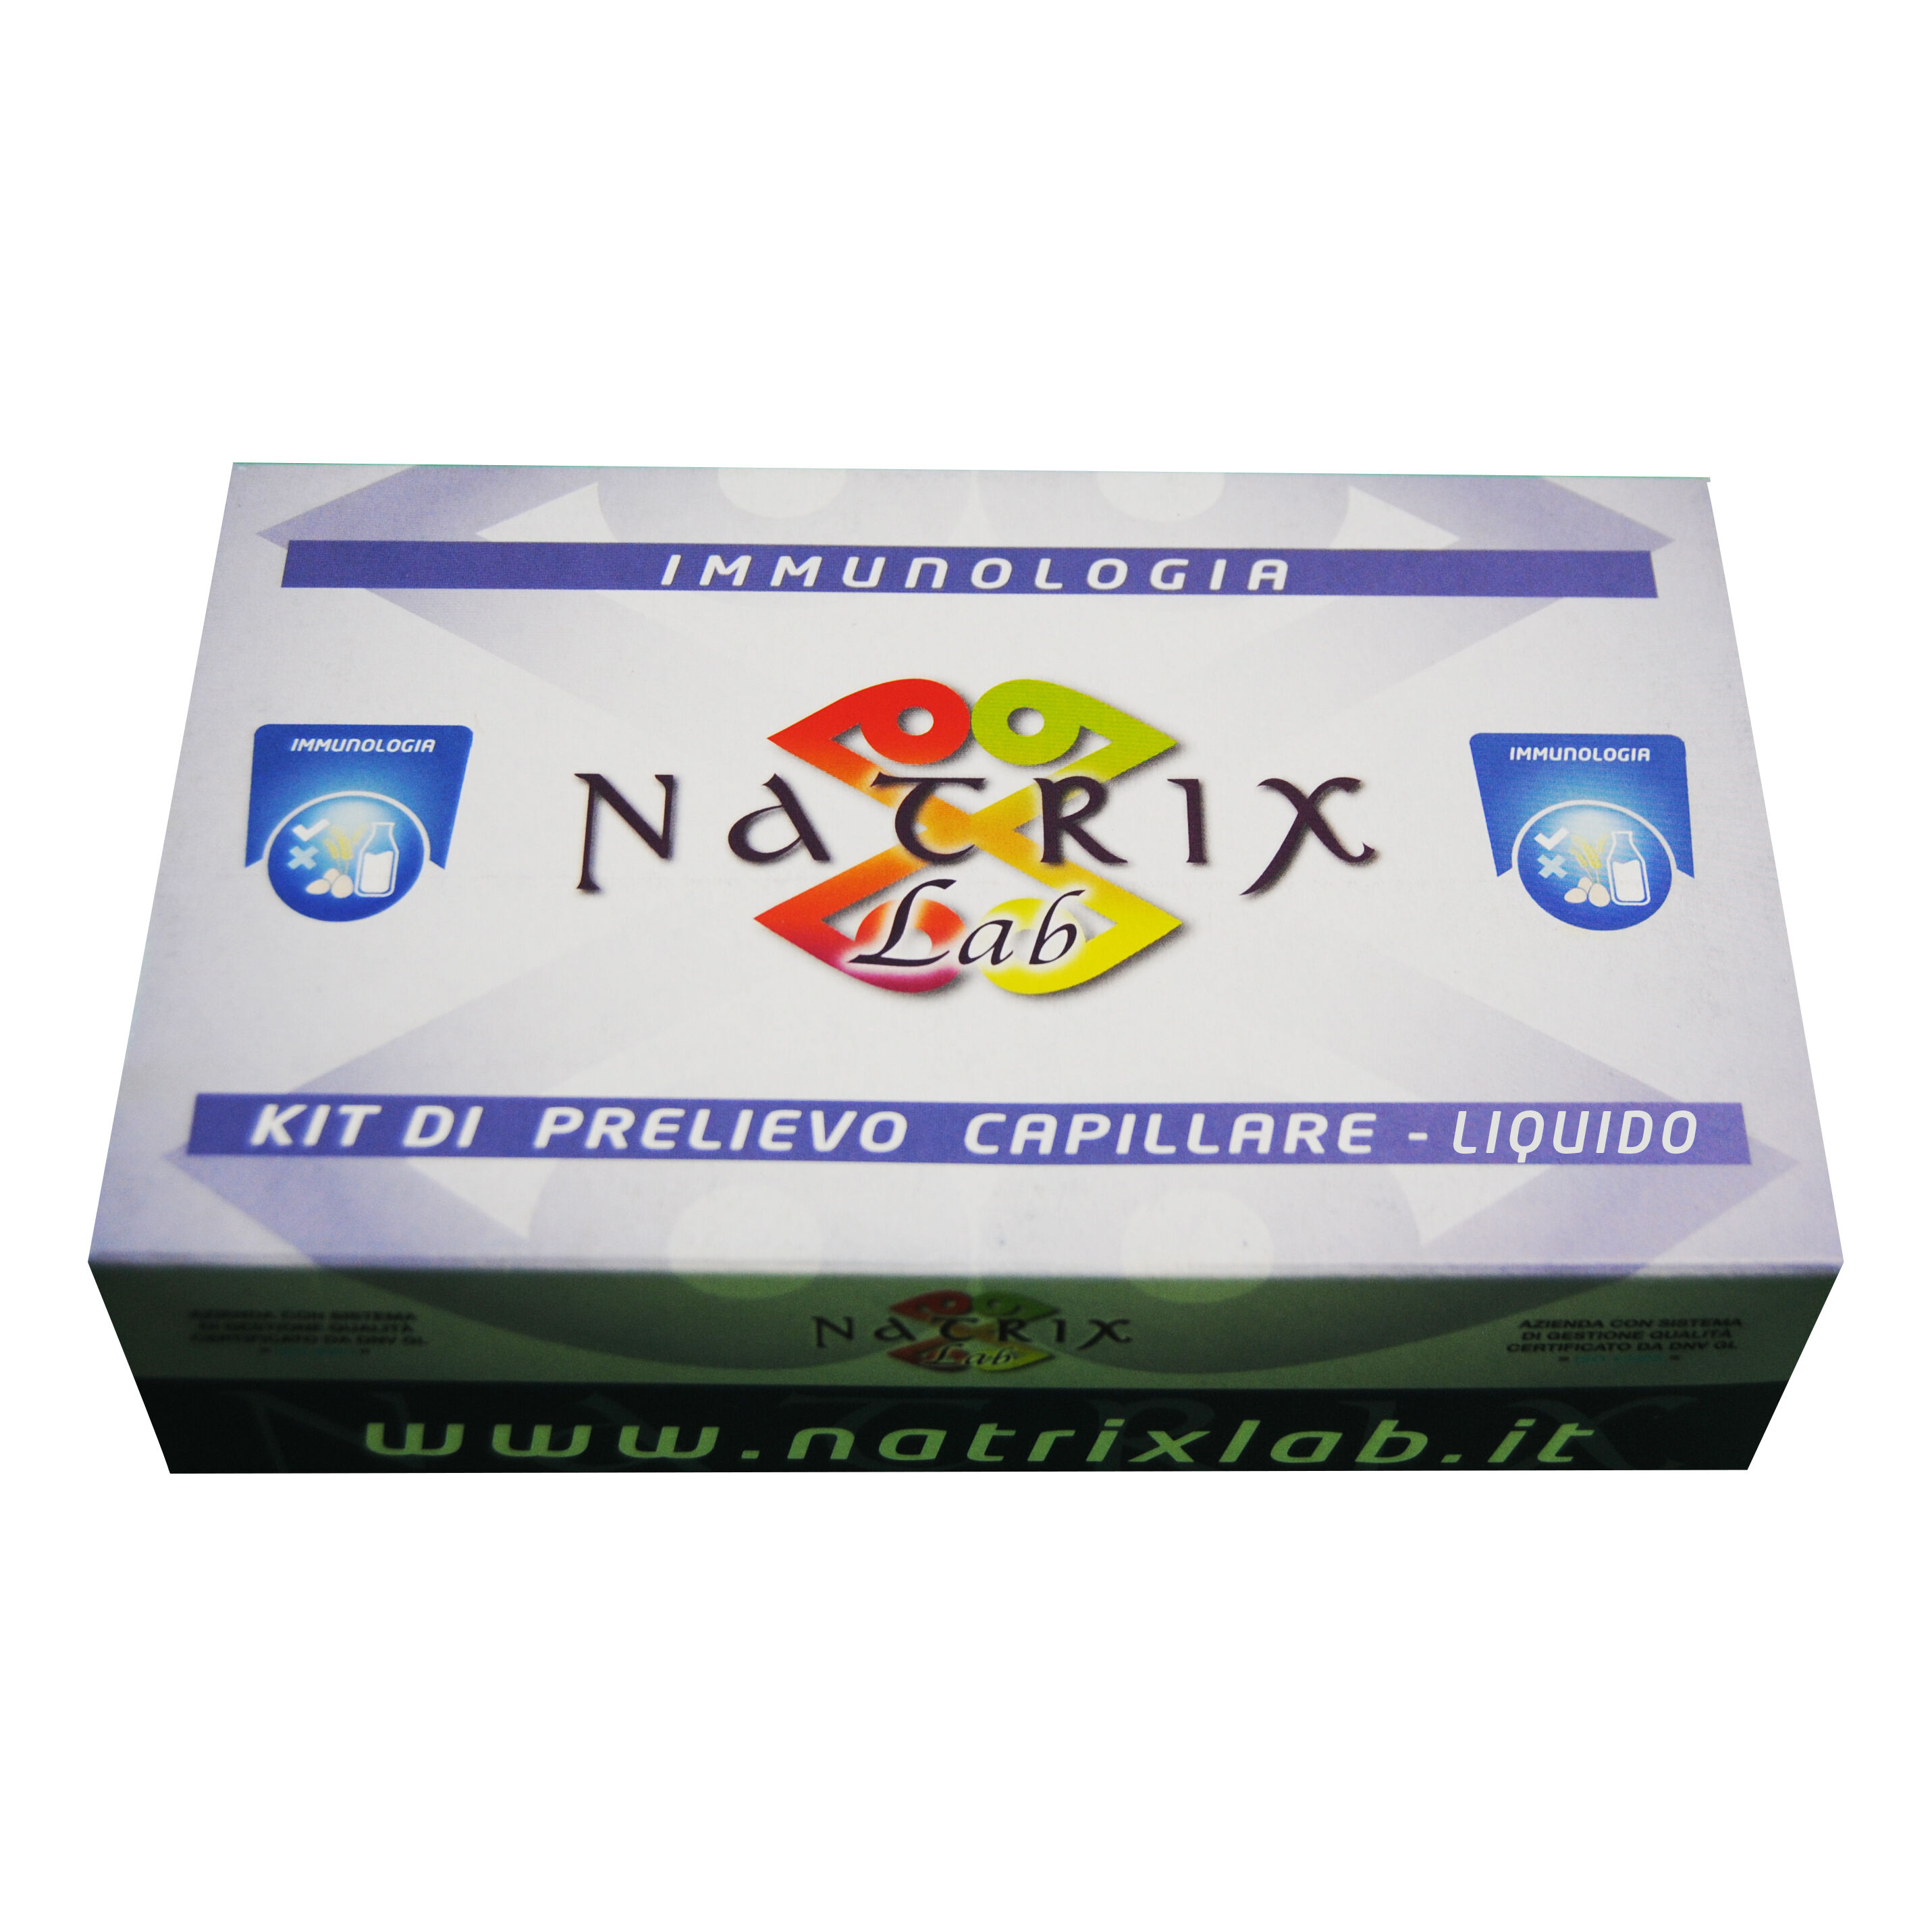 natrix srl kit area immunologica blu liq